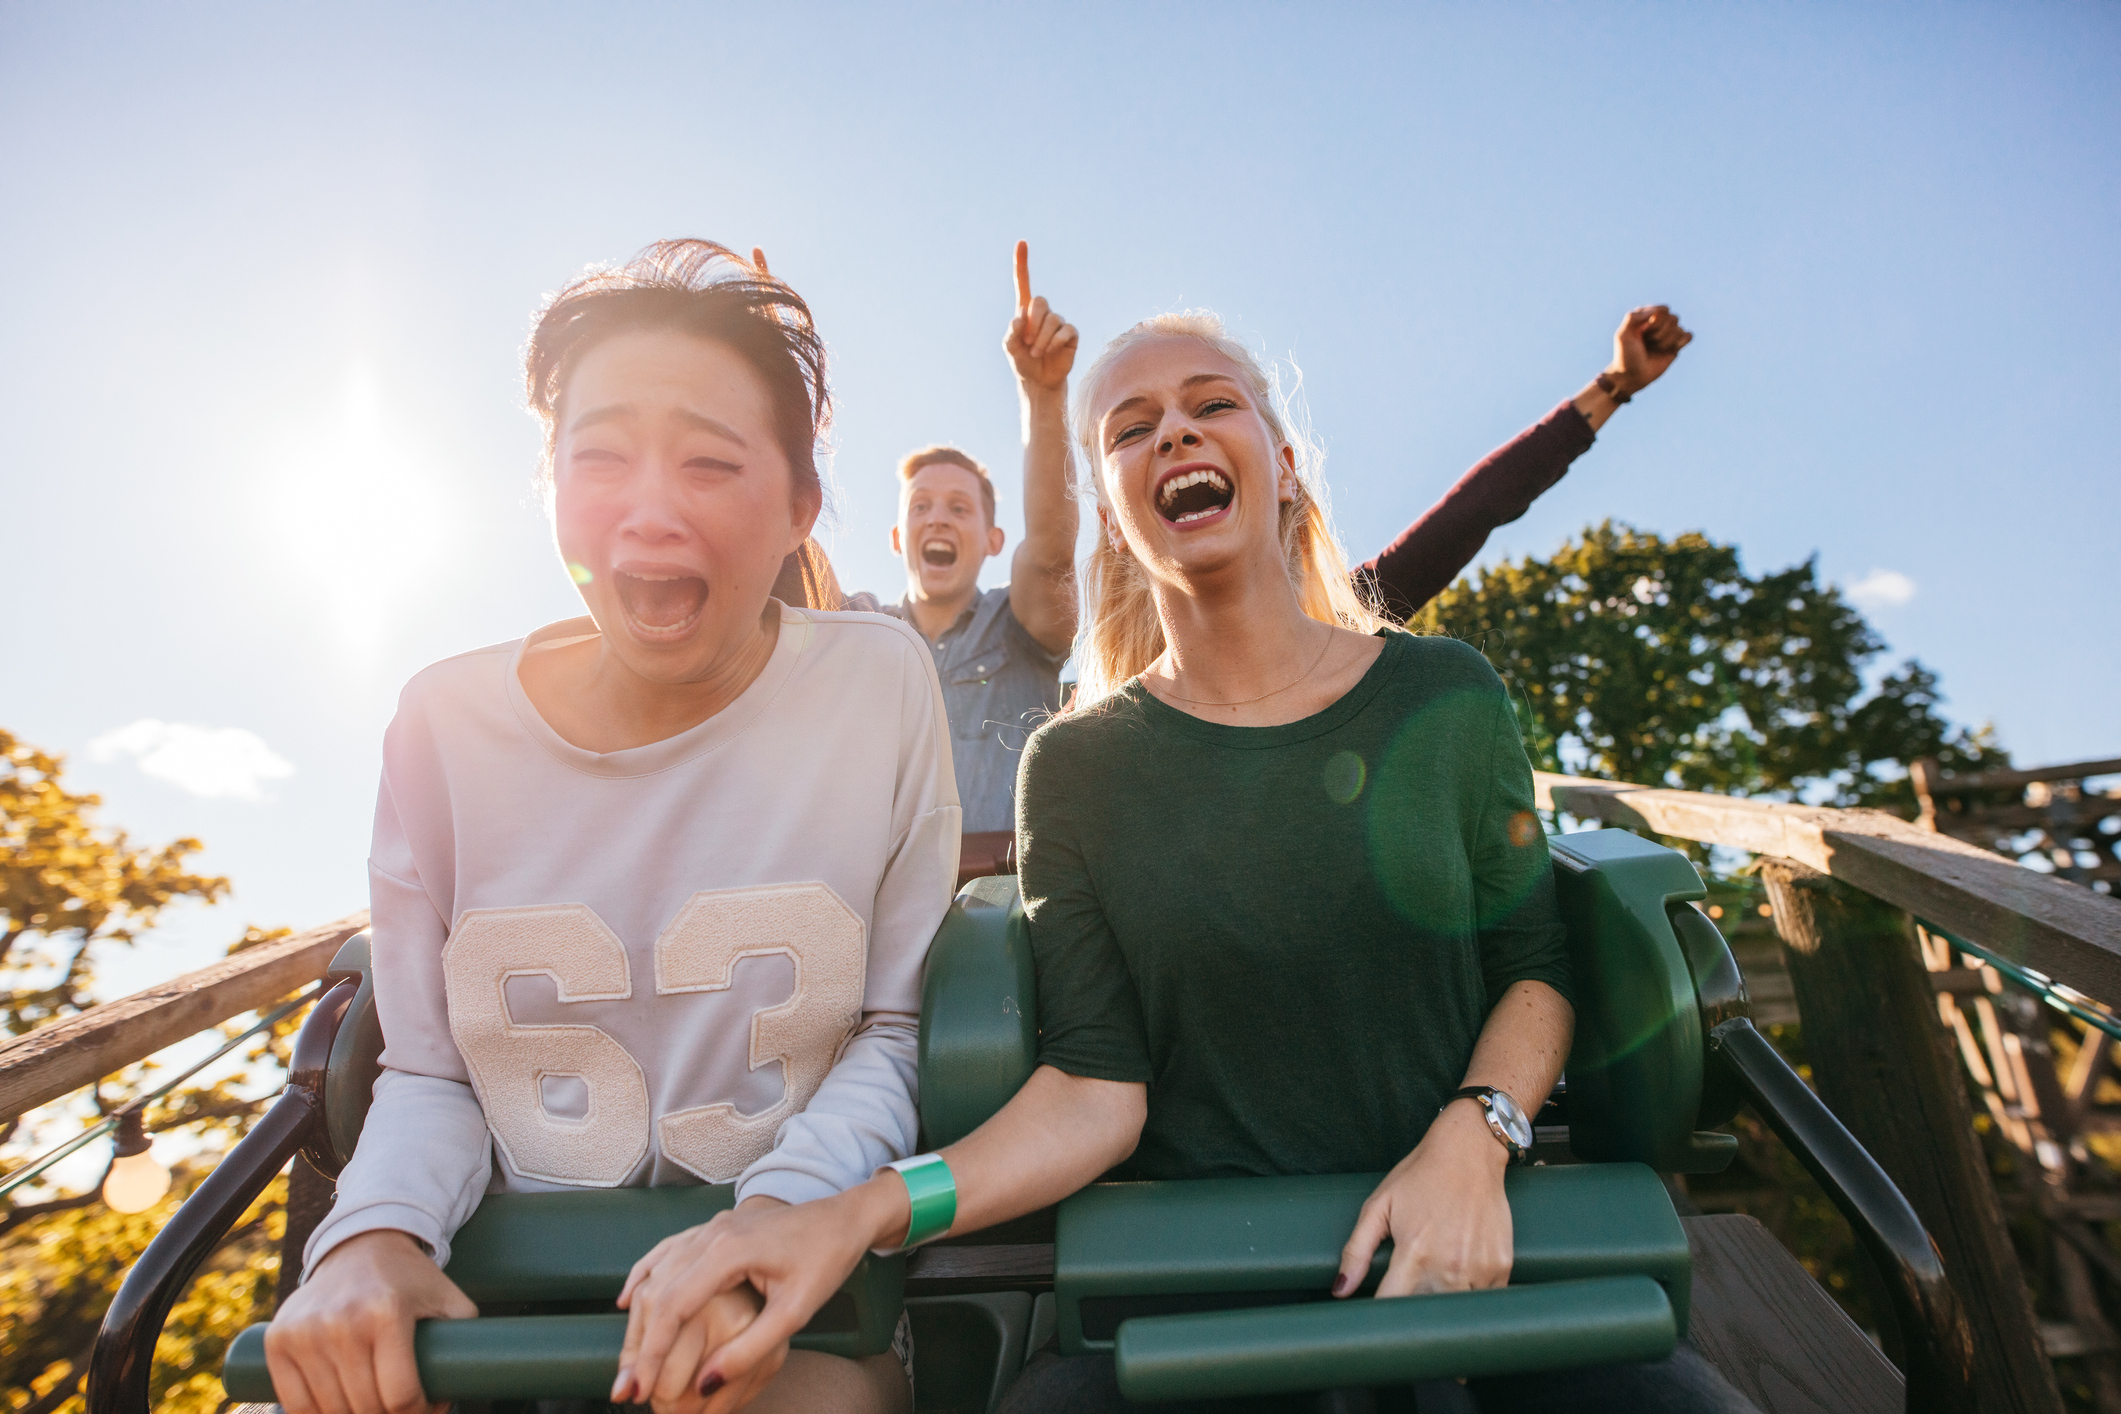 Enthusiastic young friends riding amusement park ride